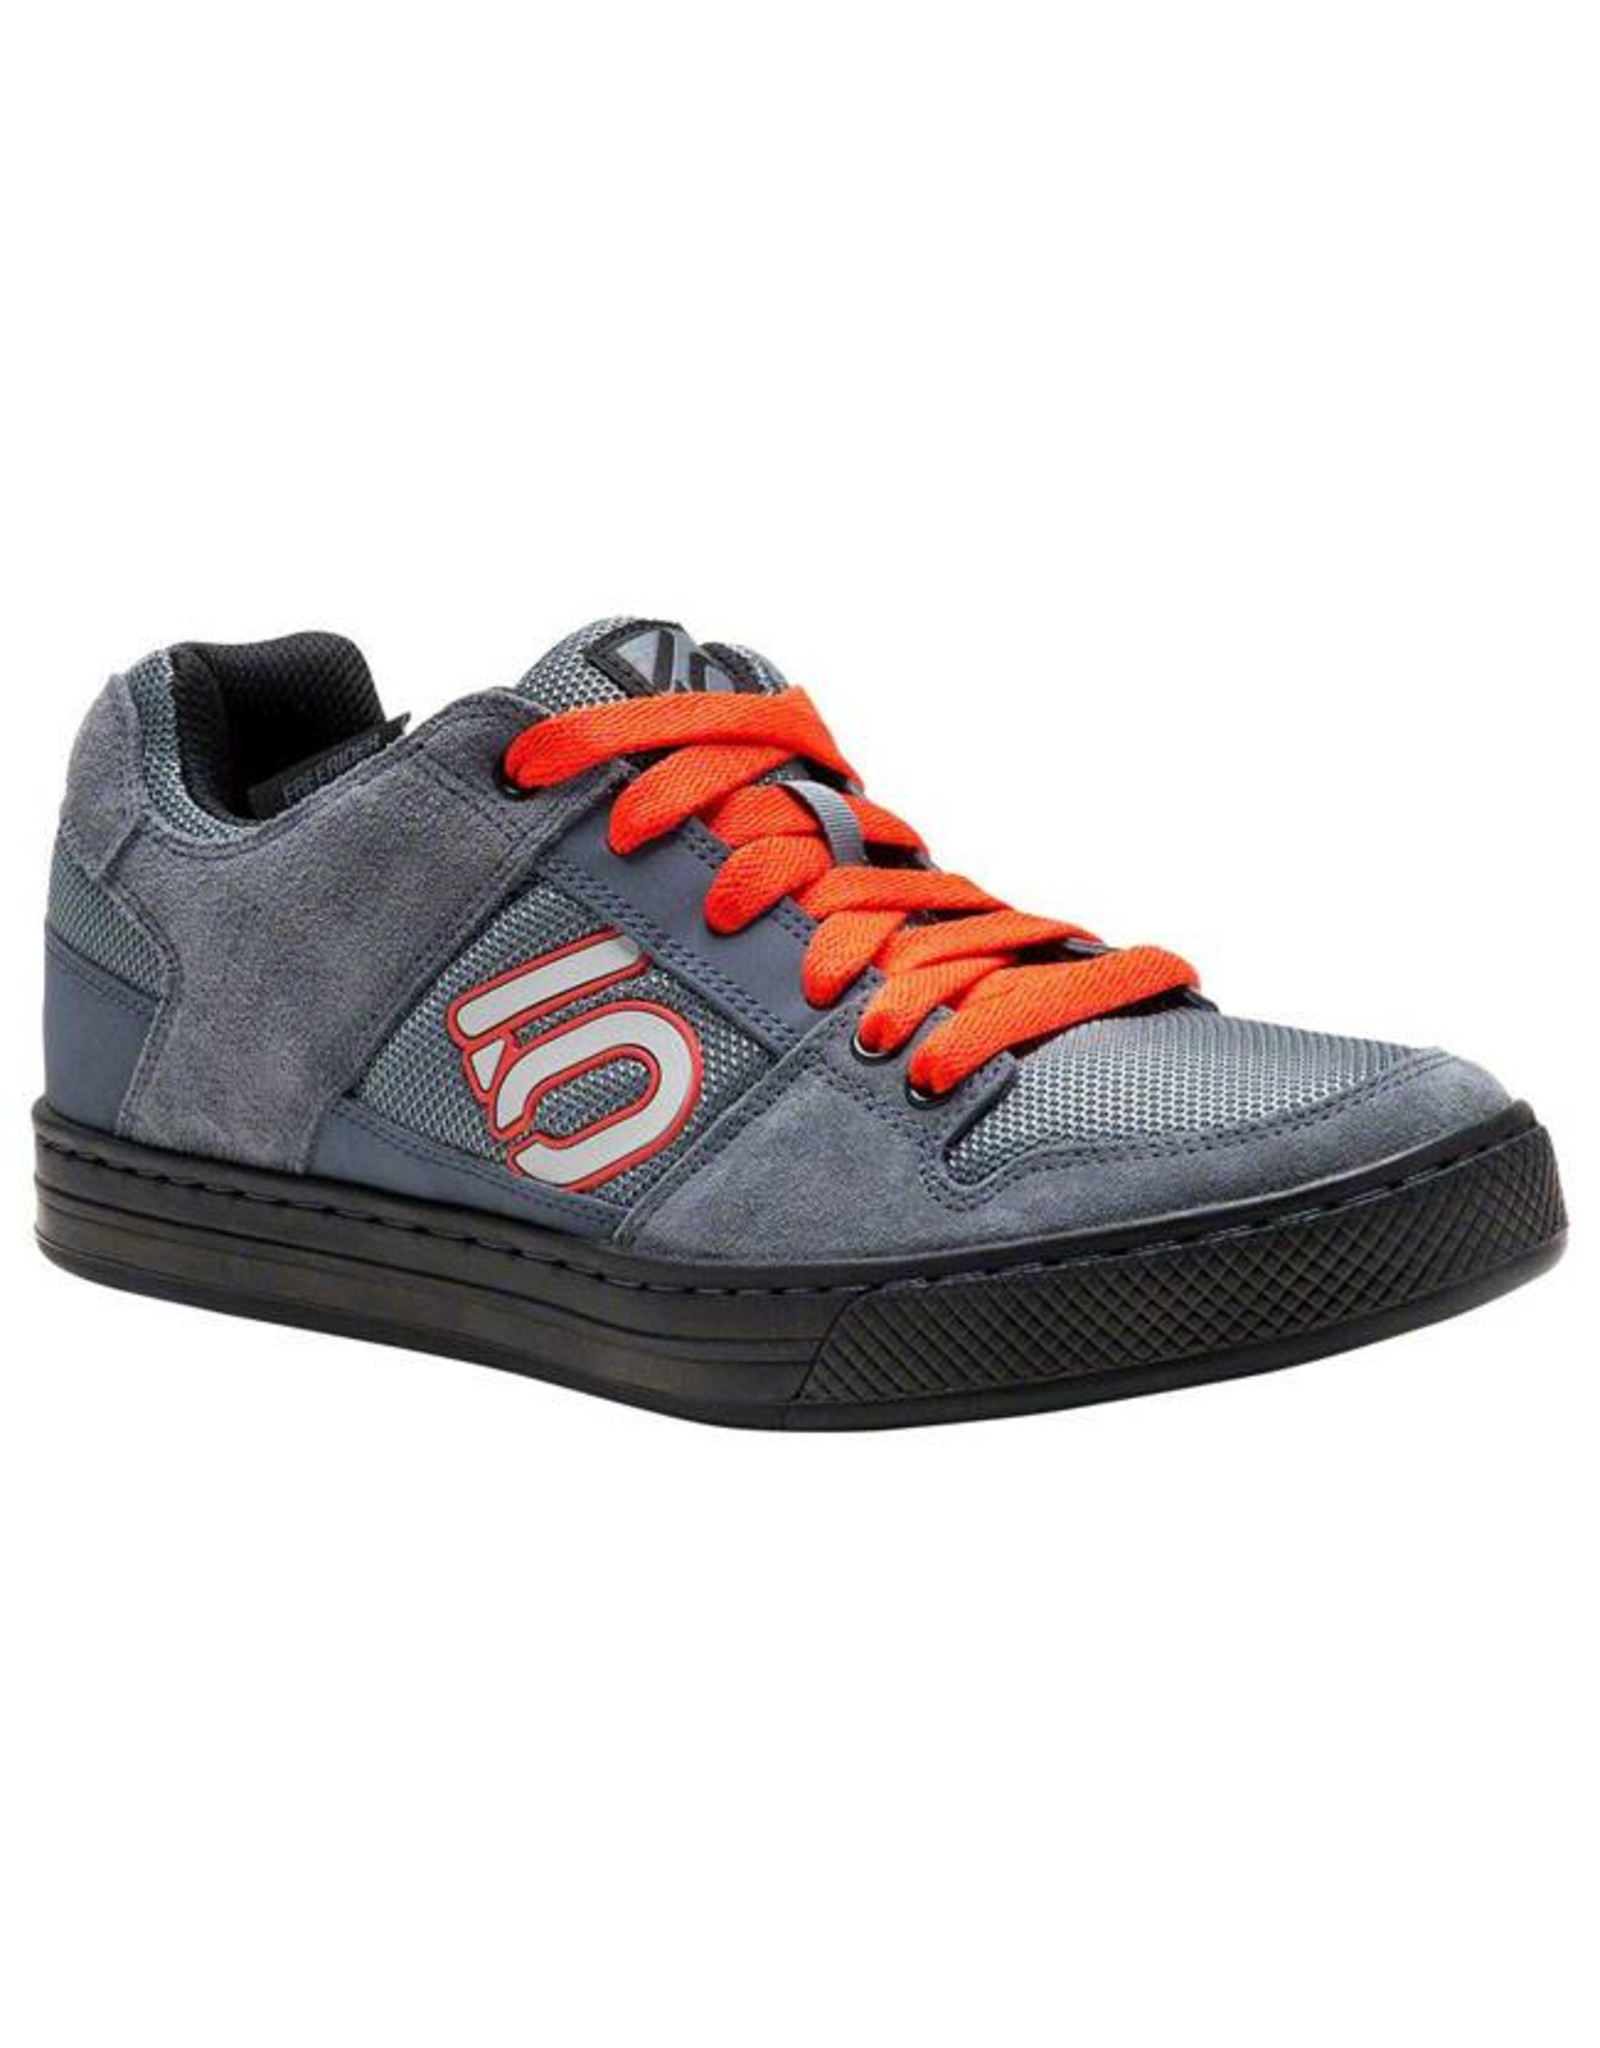 Flat Pedal Shoe: Gray/Orange 13 